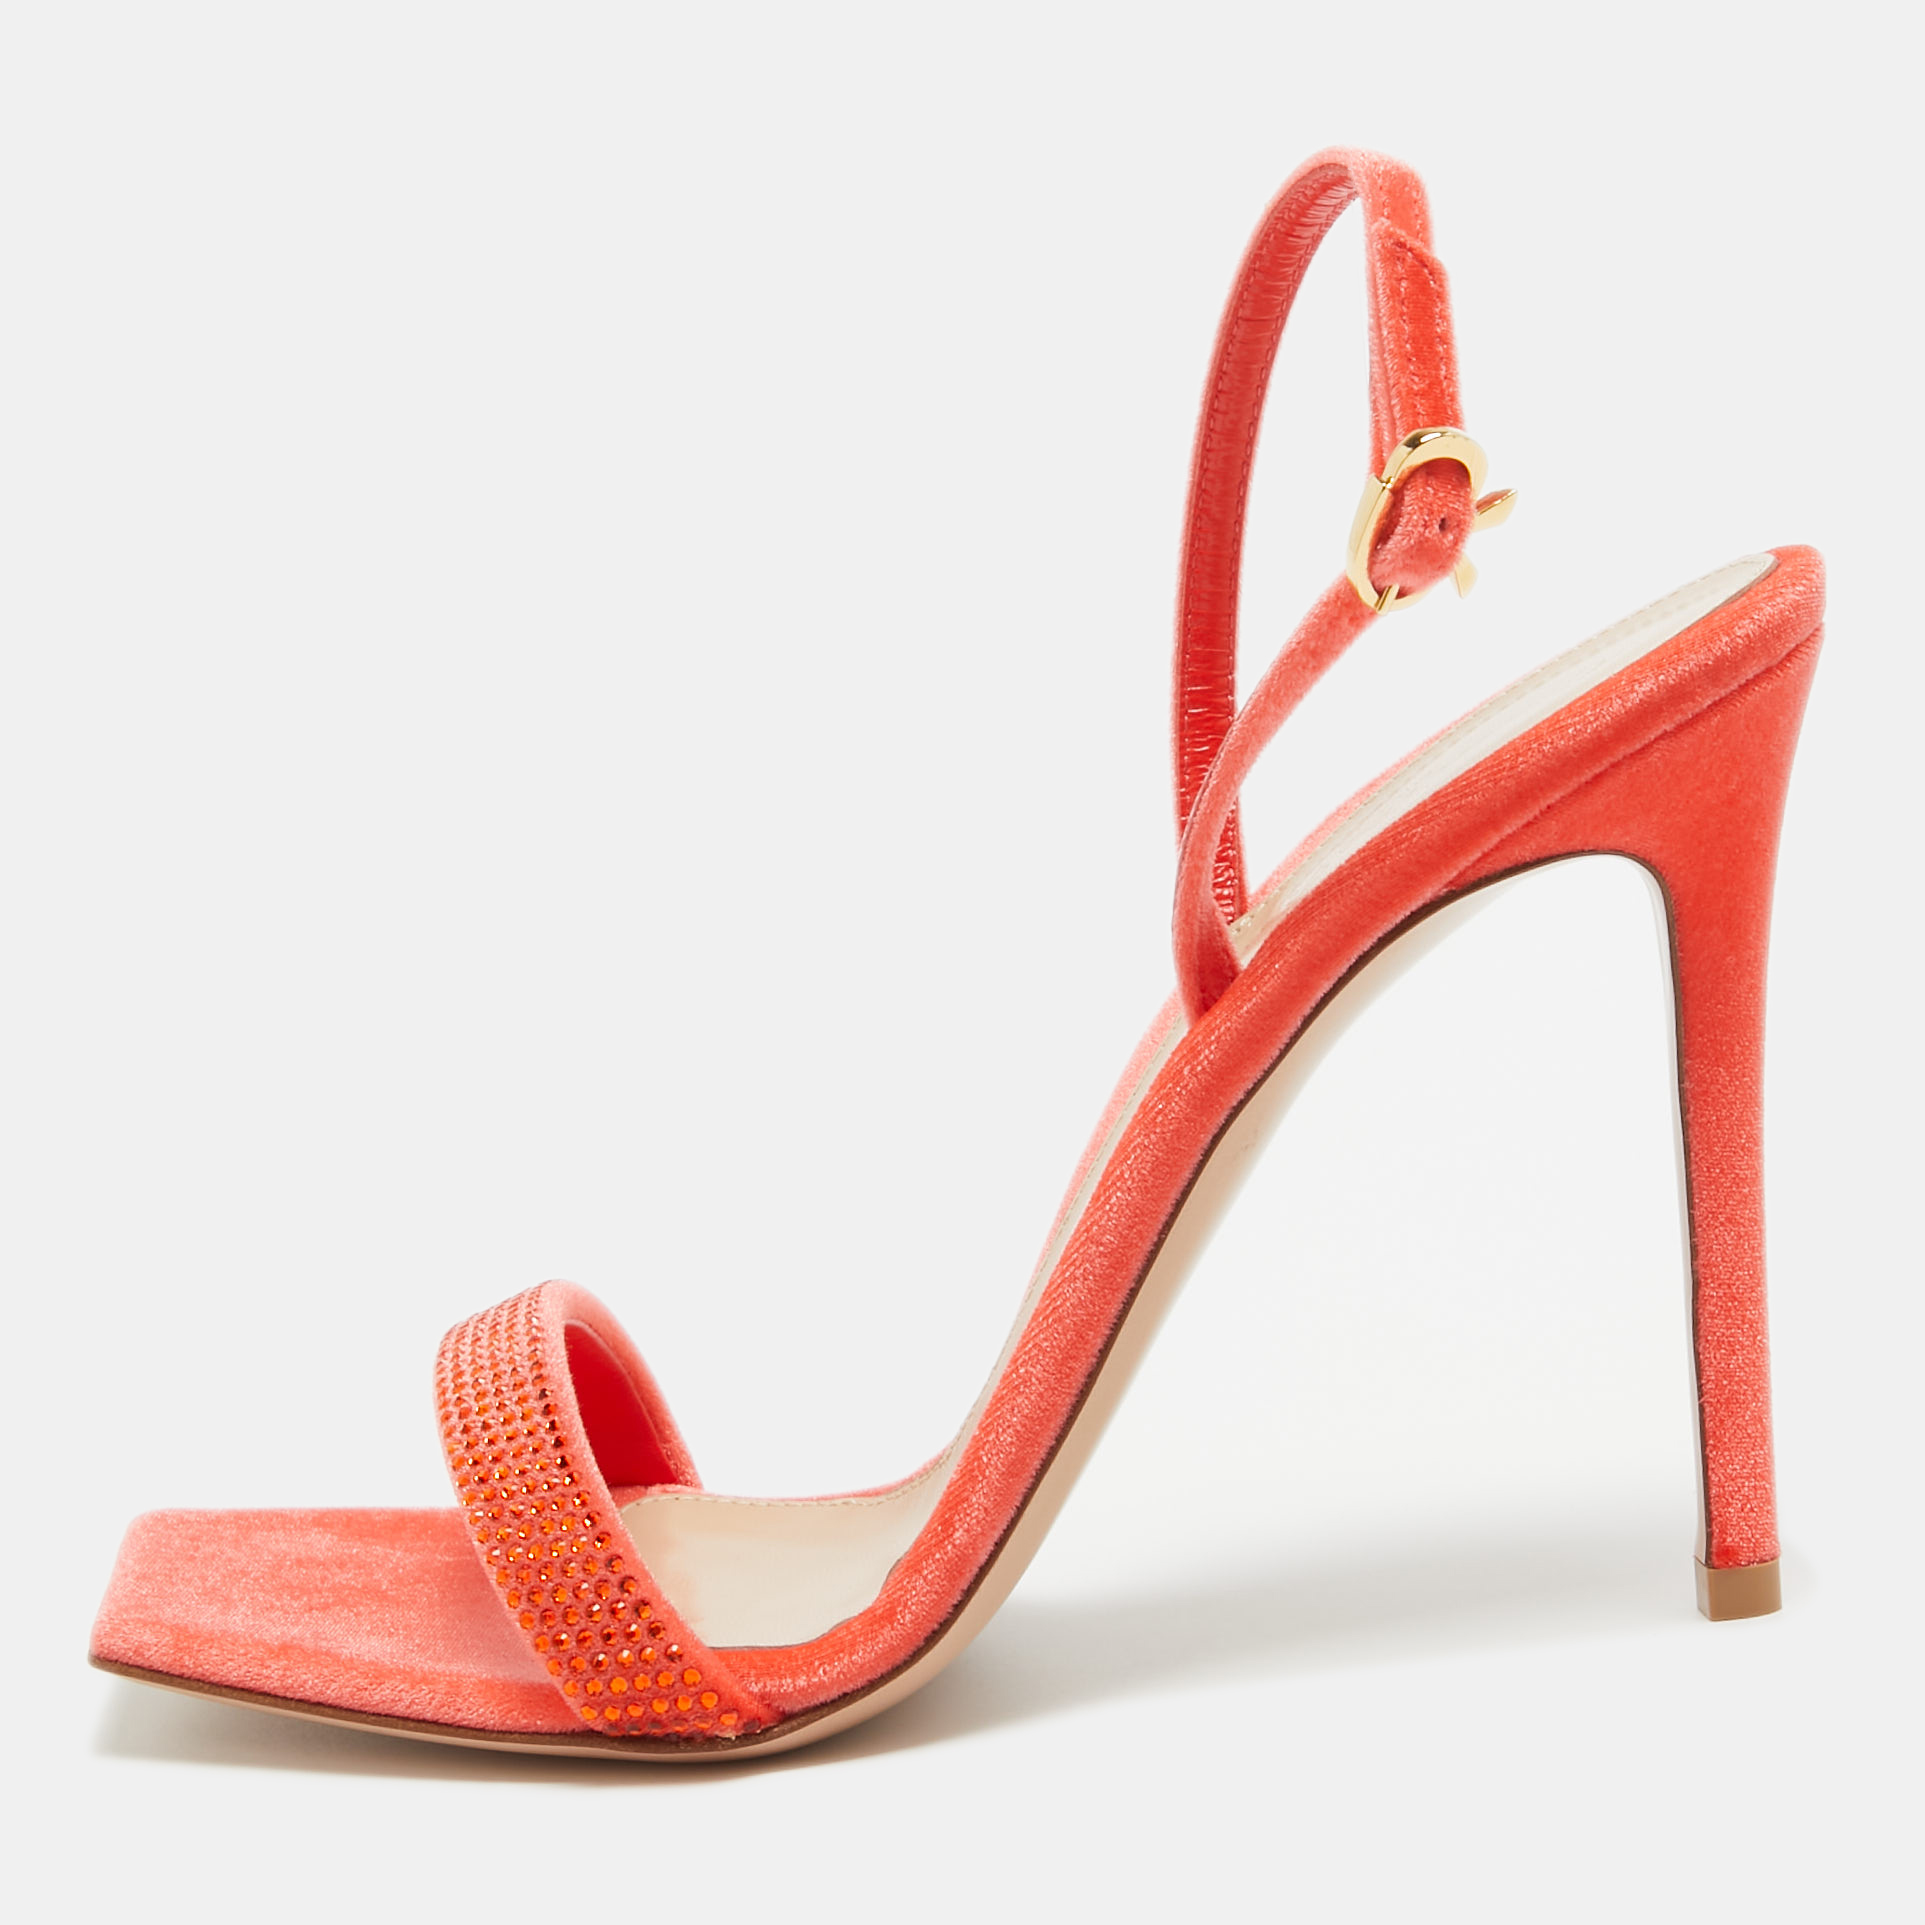 Gianvito rossi poppy red velvet embellished britney sandals size 39.5